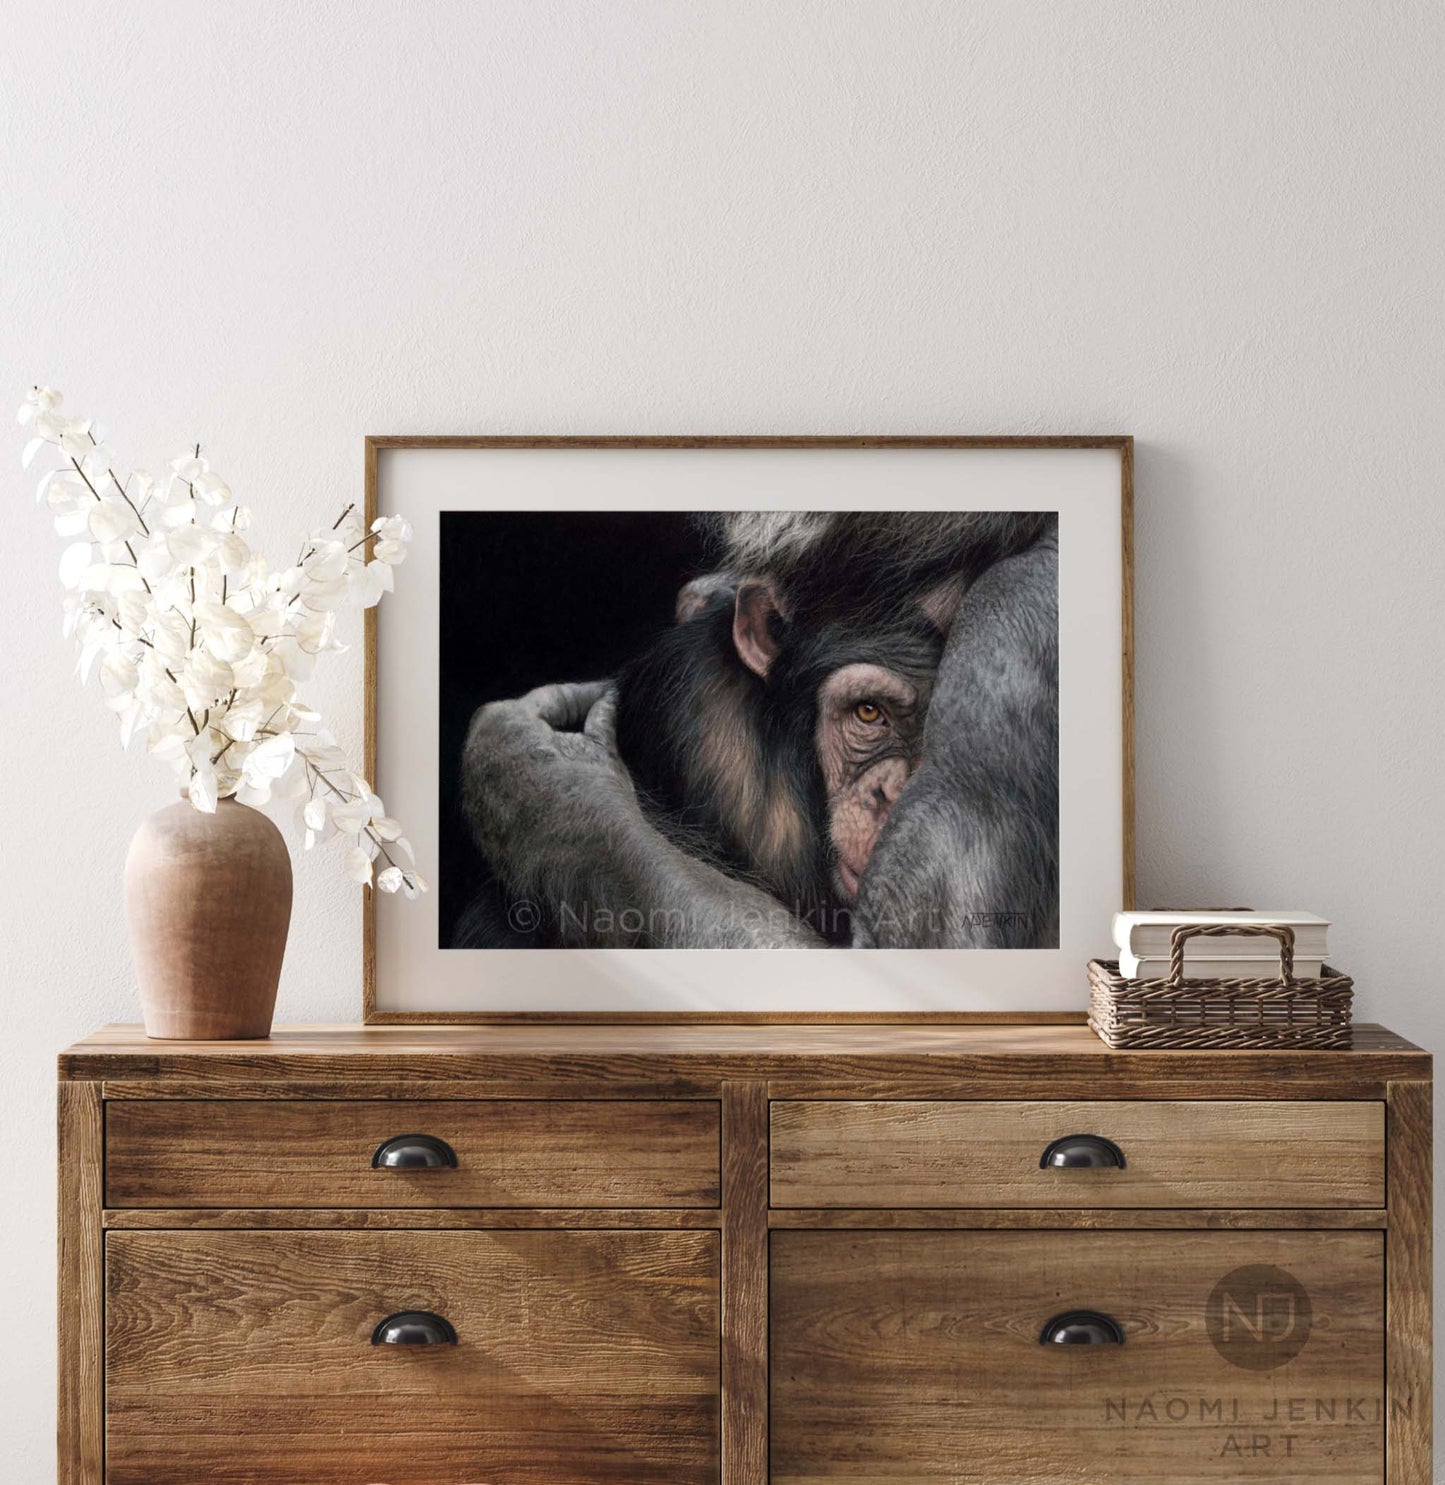 Framed chimpanzee drawing "Embrace" by wildlife artist Naomi Jenkin Art. 